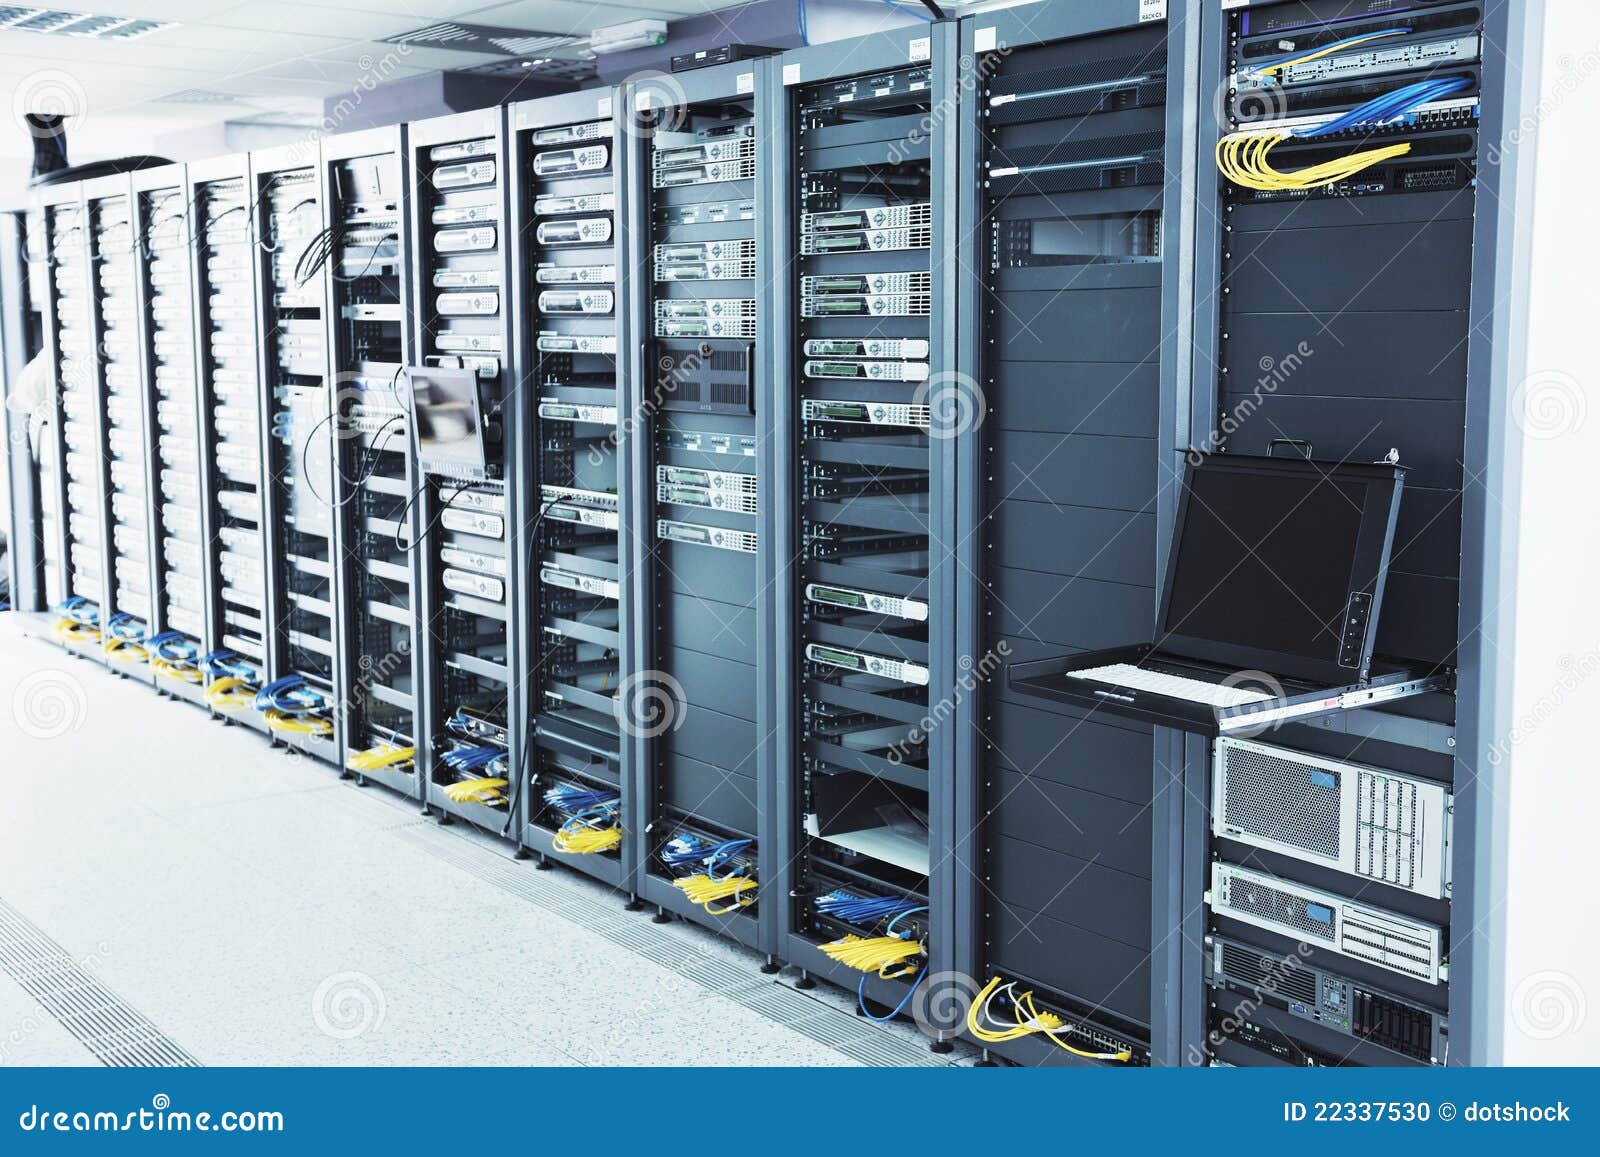 Network server room stock photo. Image of database ...